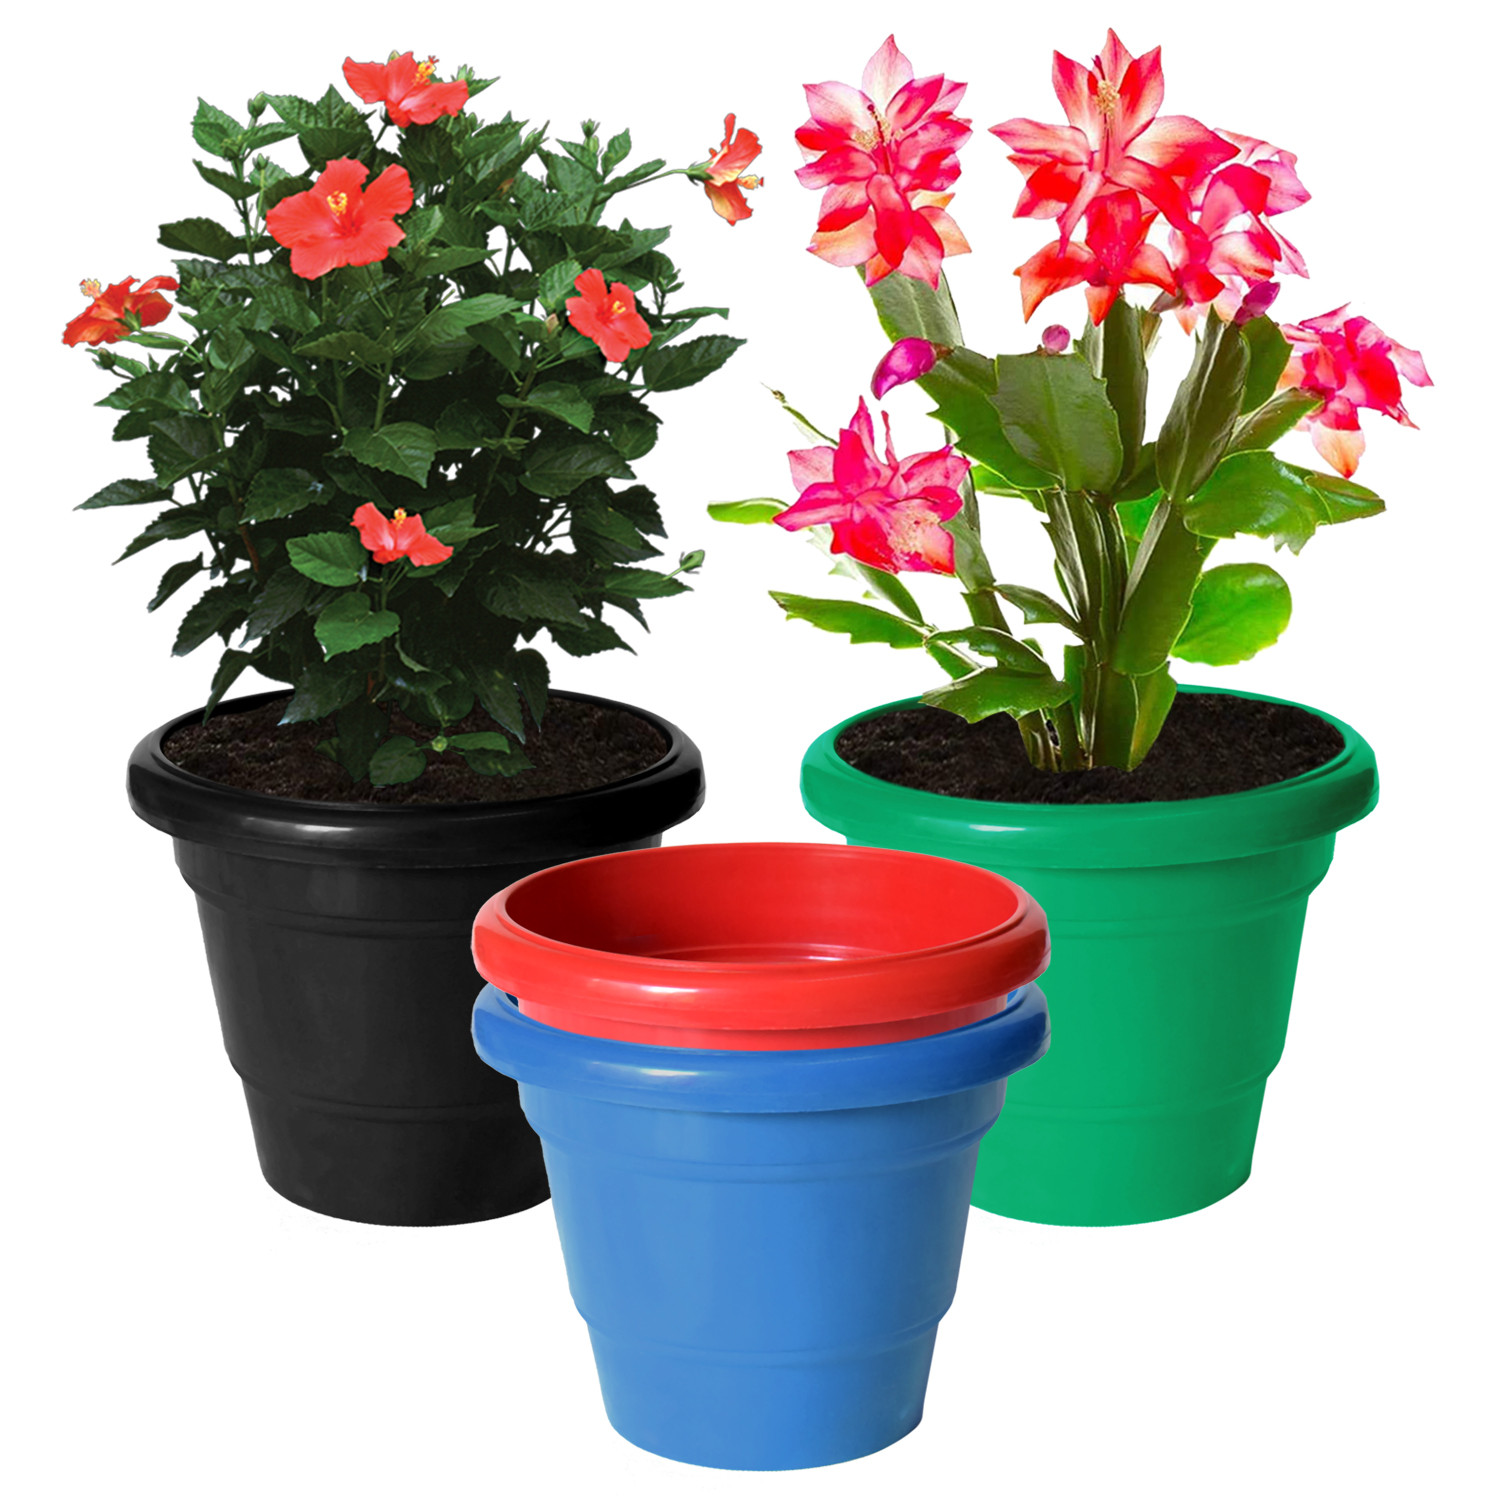 Kuber Industries Solid 2 Layered Plastic Flower Pot|Gamla|Flower Pots for Garden Nursery,Home Décor,6